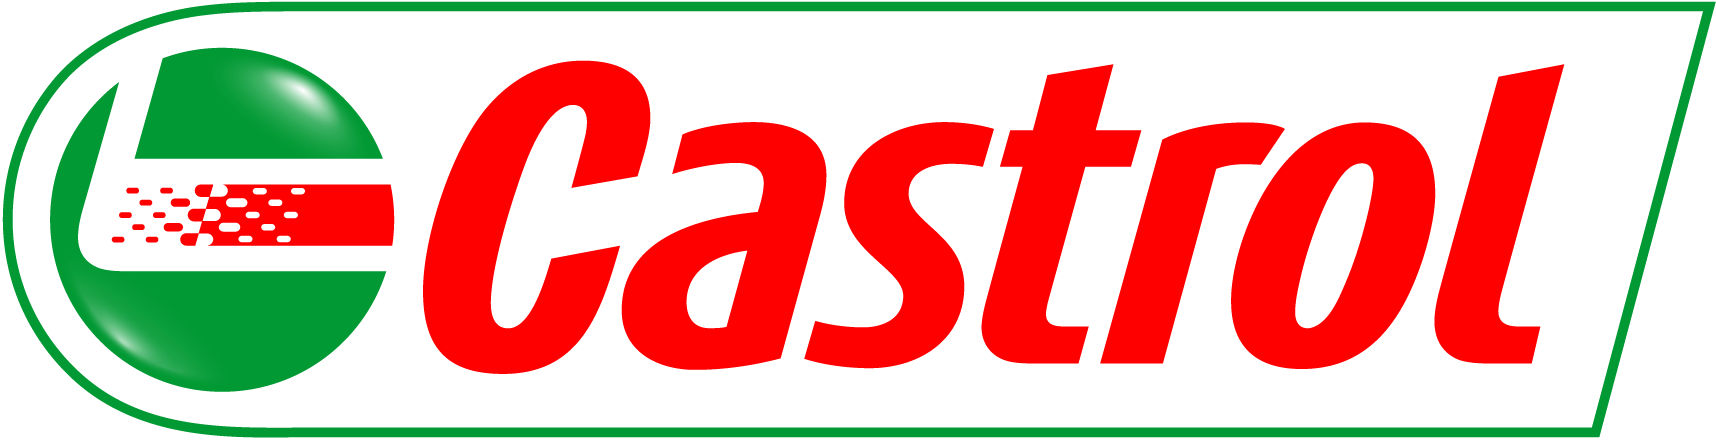 Logo CASTROL